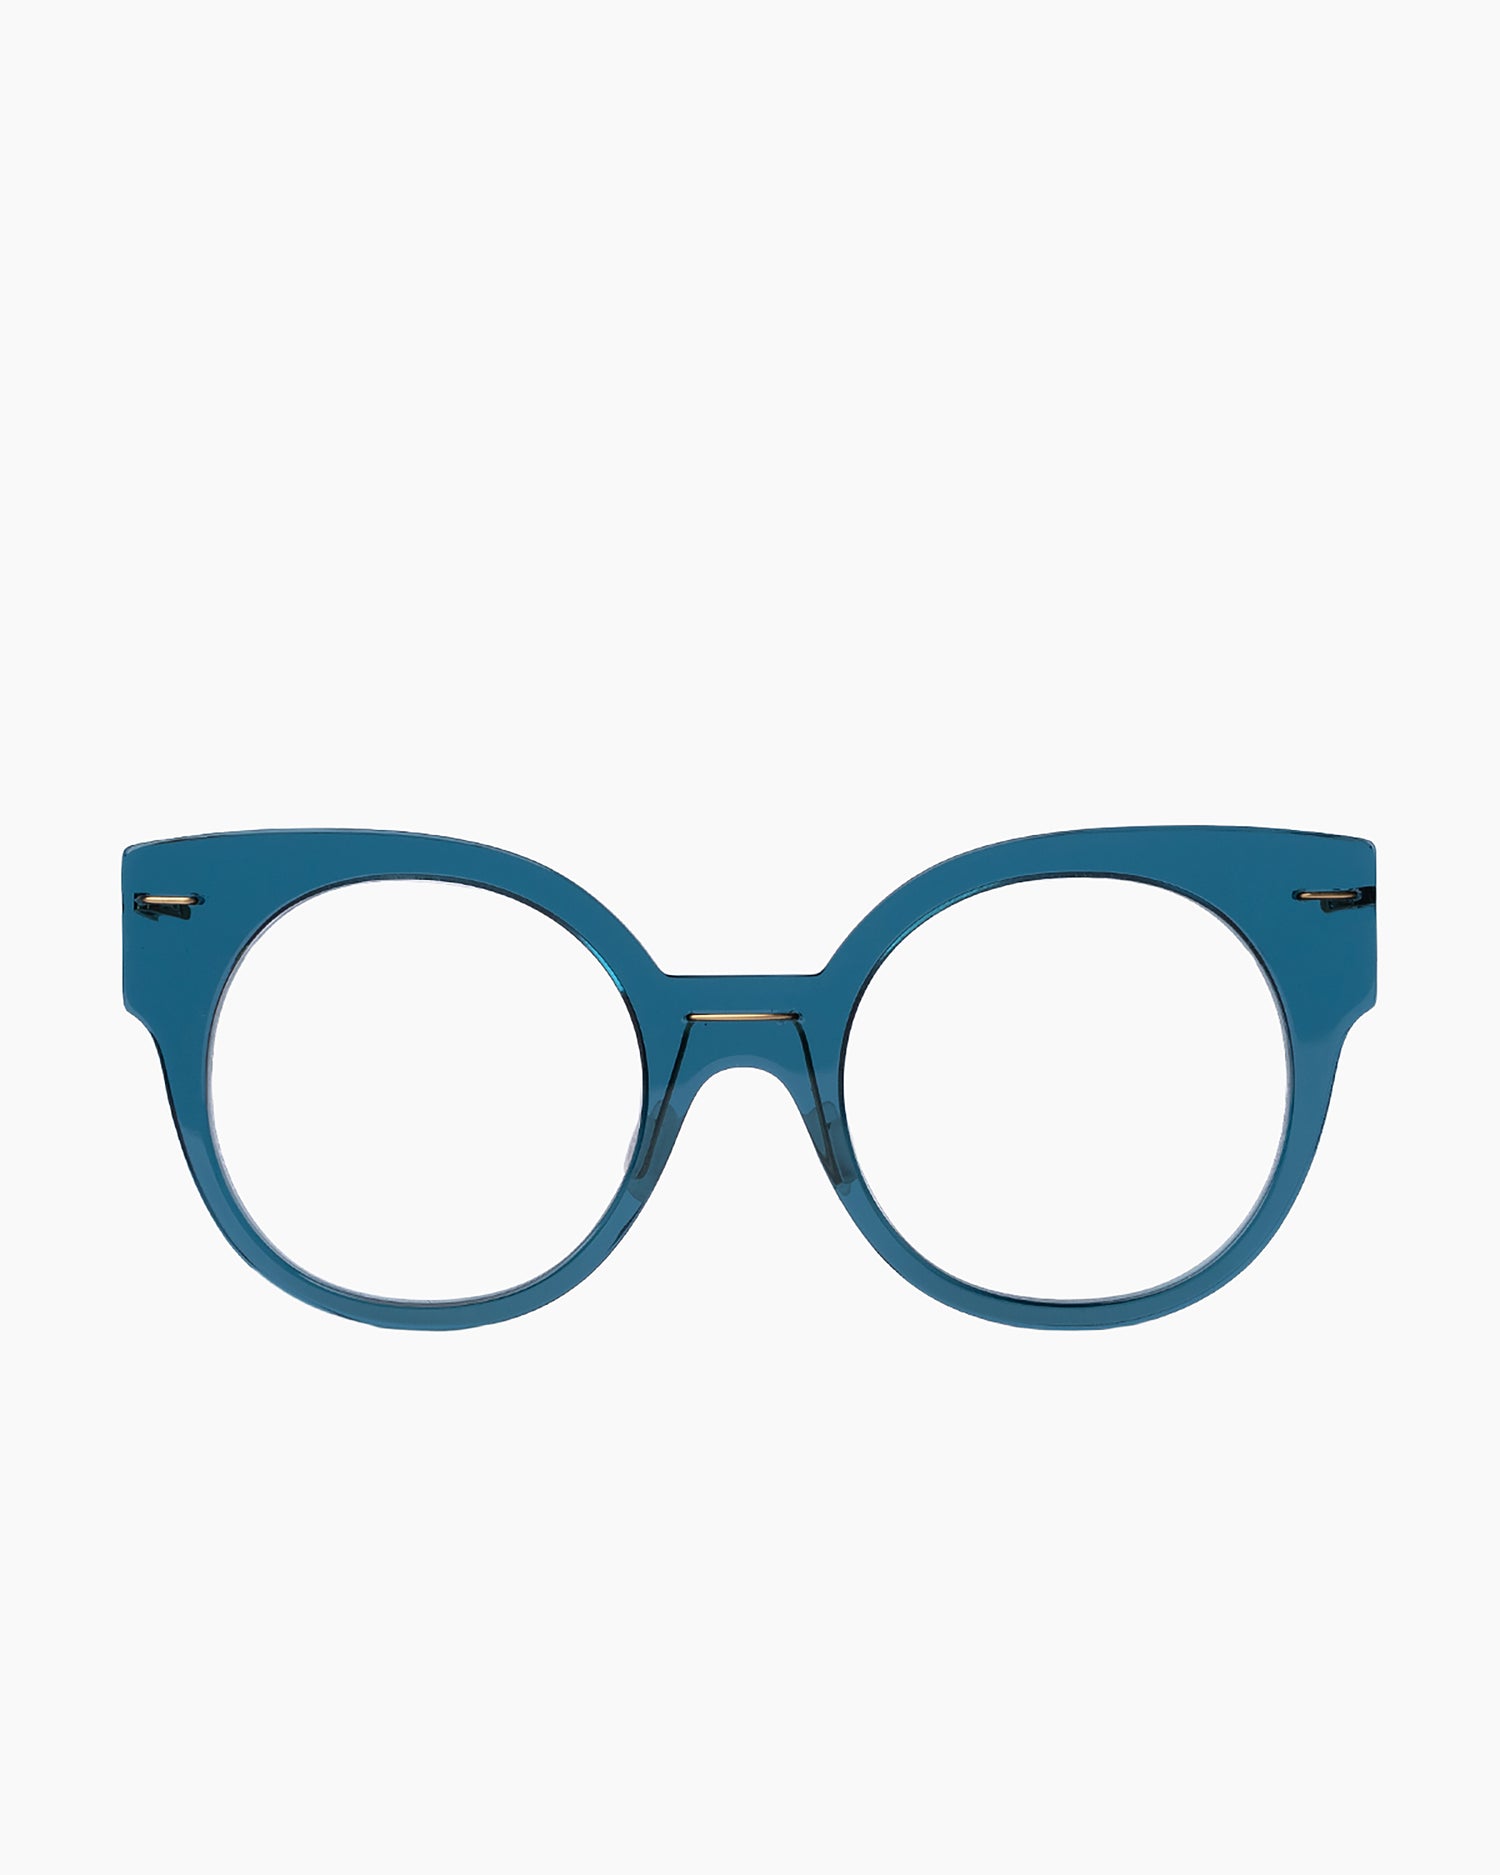 Monogram Marie-Sophie Dion - Brixi - Blu | glasses bar:  Marie-Sophie Dion